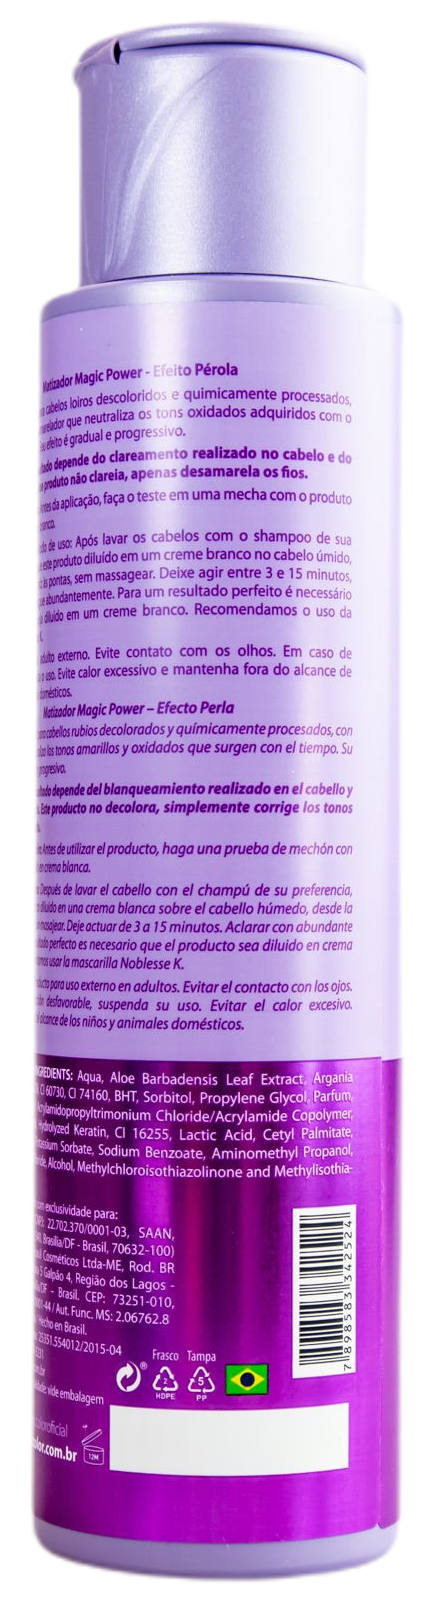 Magic Color Brazilian Keratin Treatment Magic Power Pearl Effect Treatment 3D Tinting Gloss Mask 500ml - Magic Color